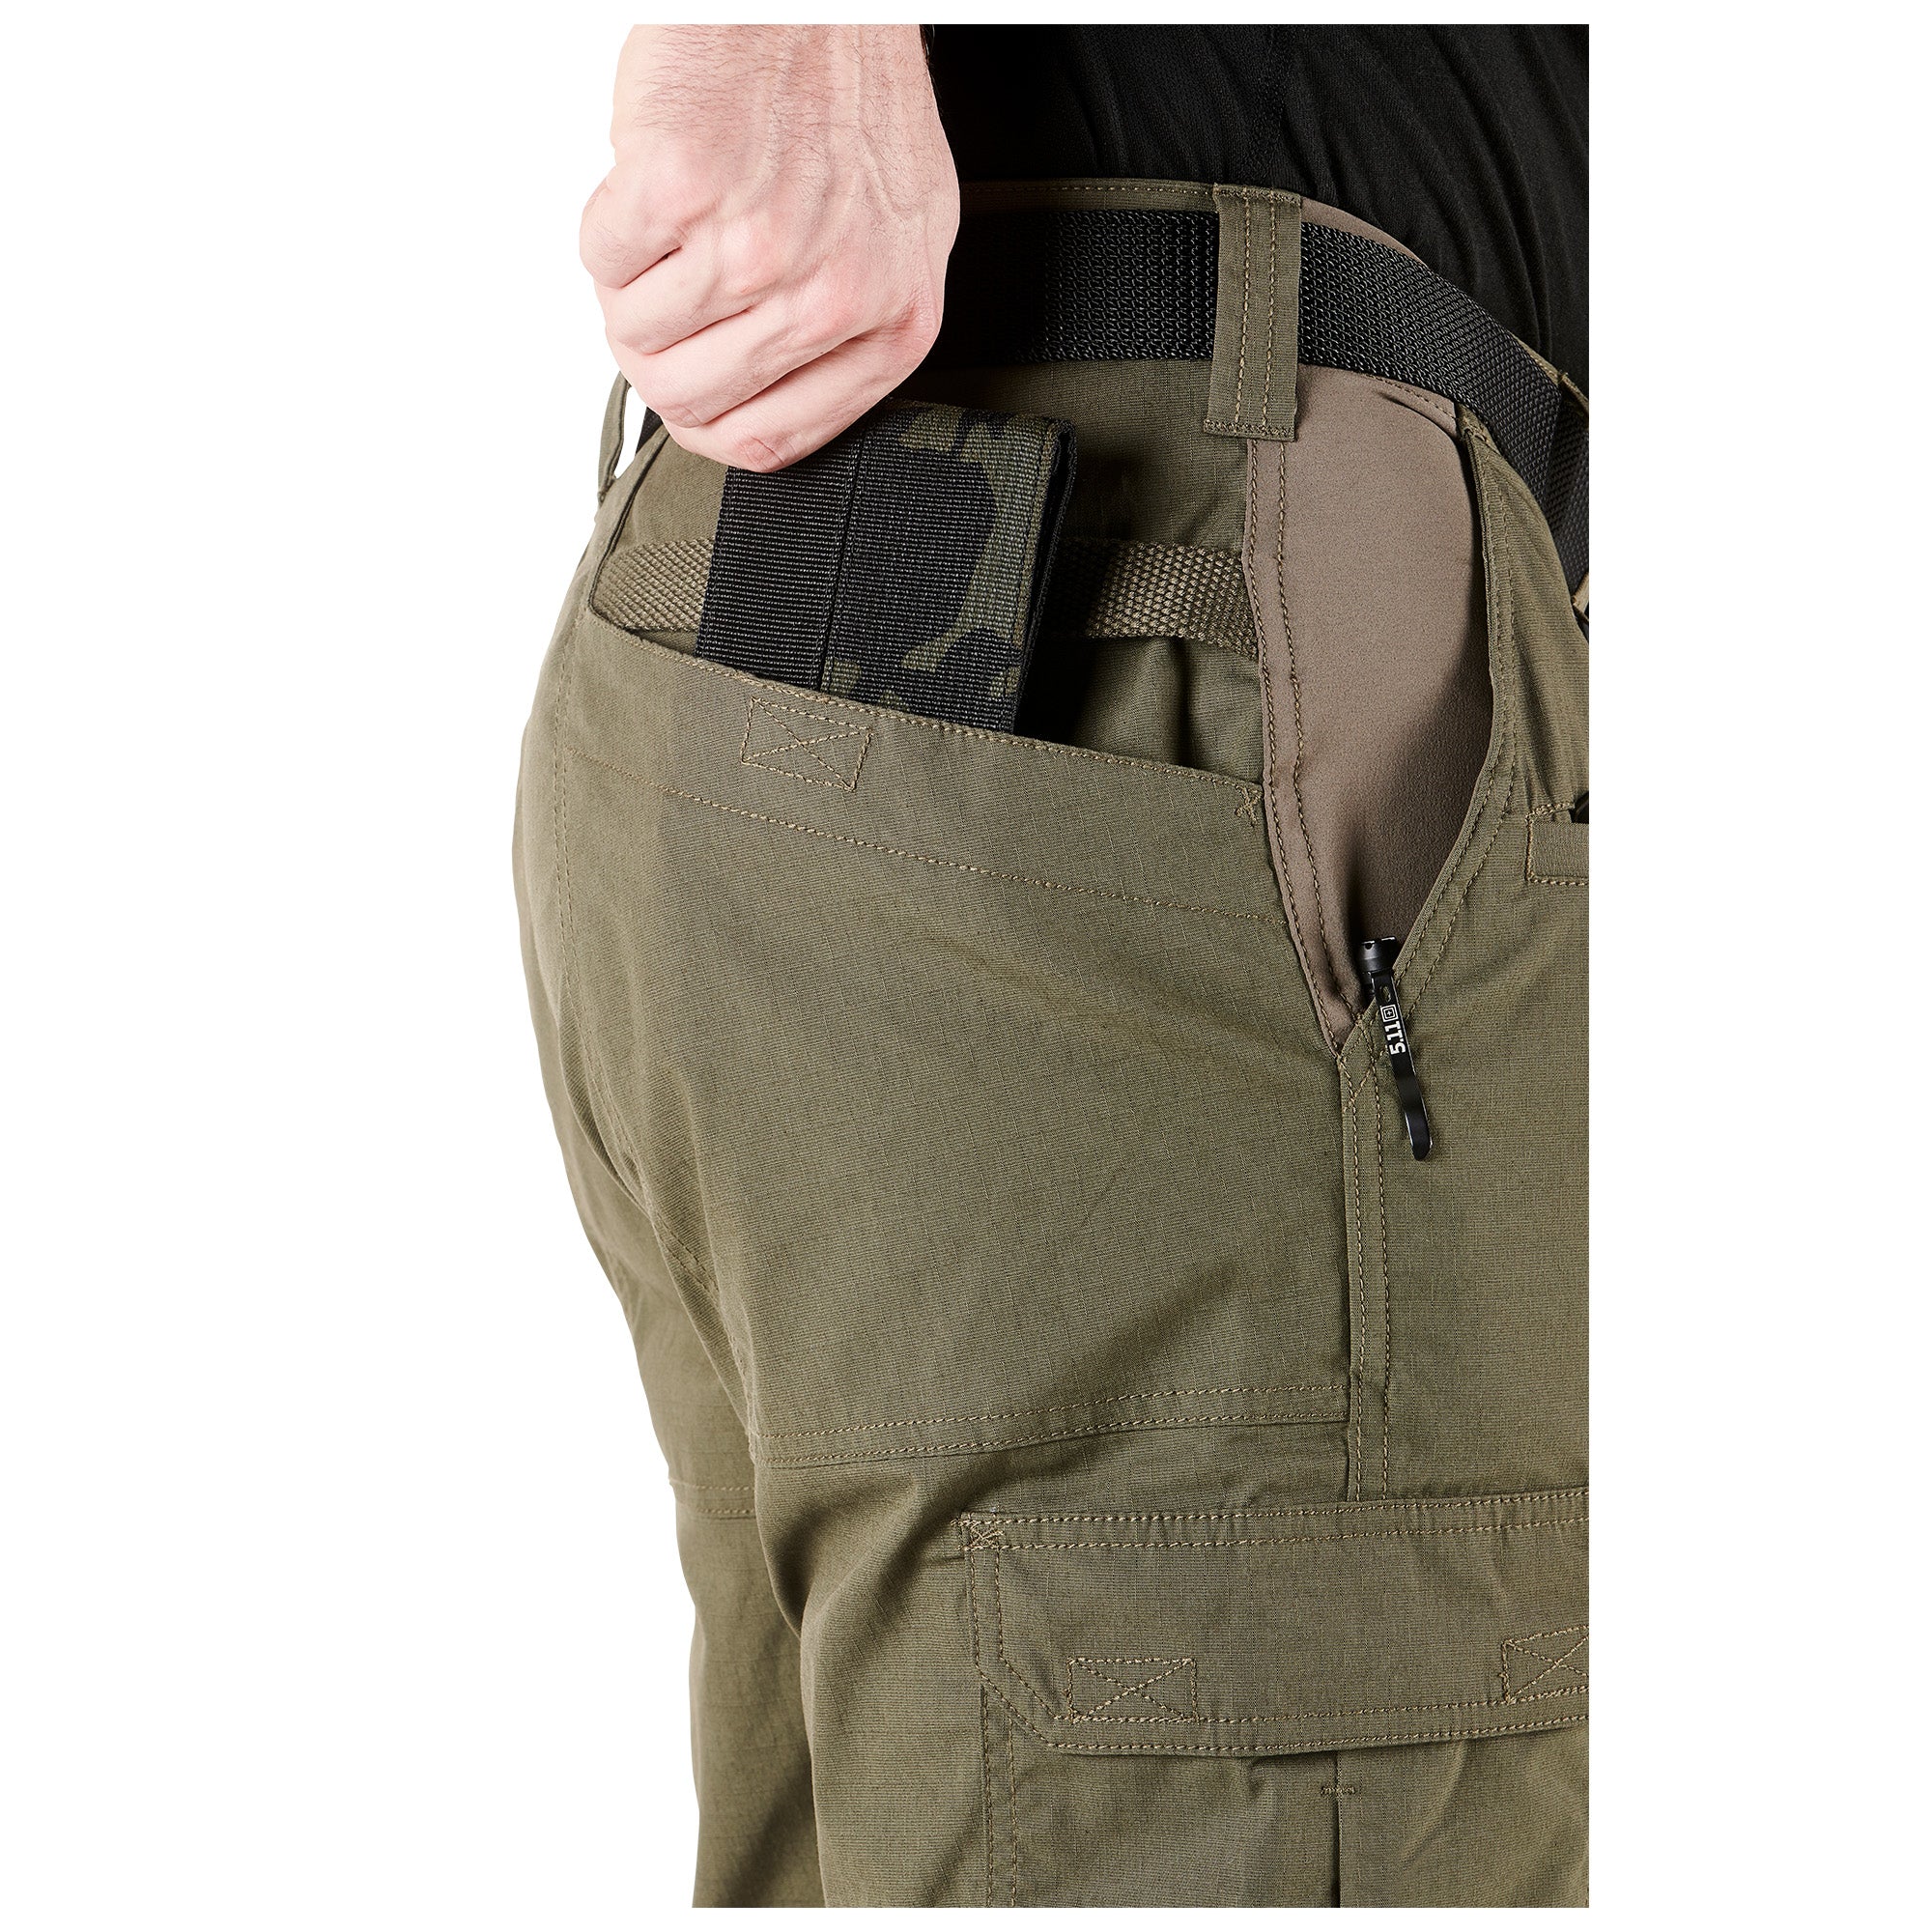 5.11 Tactical ABR Pro Pants Ranger Green